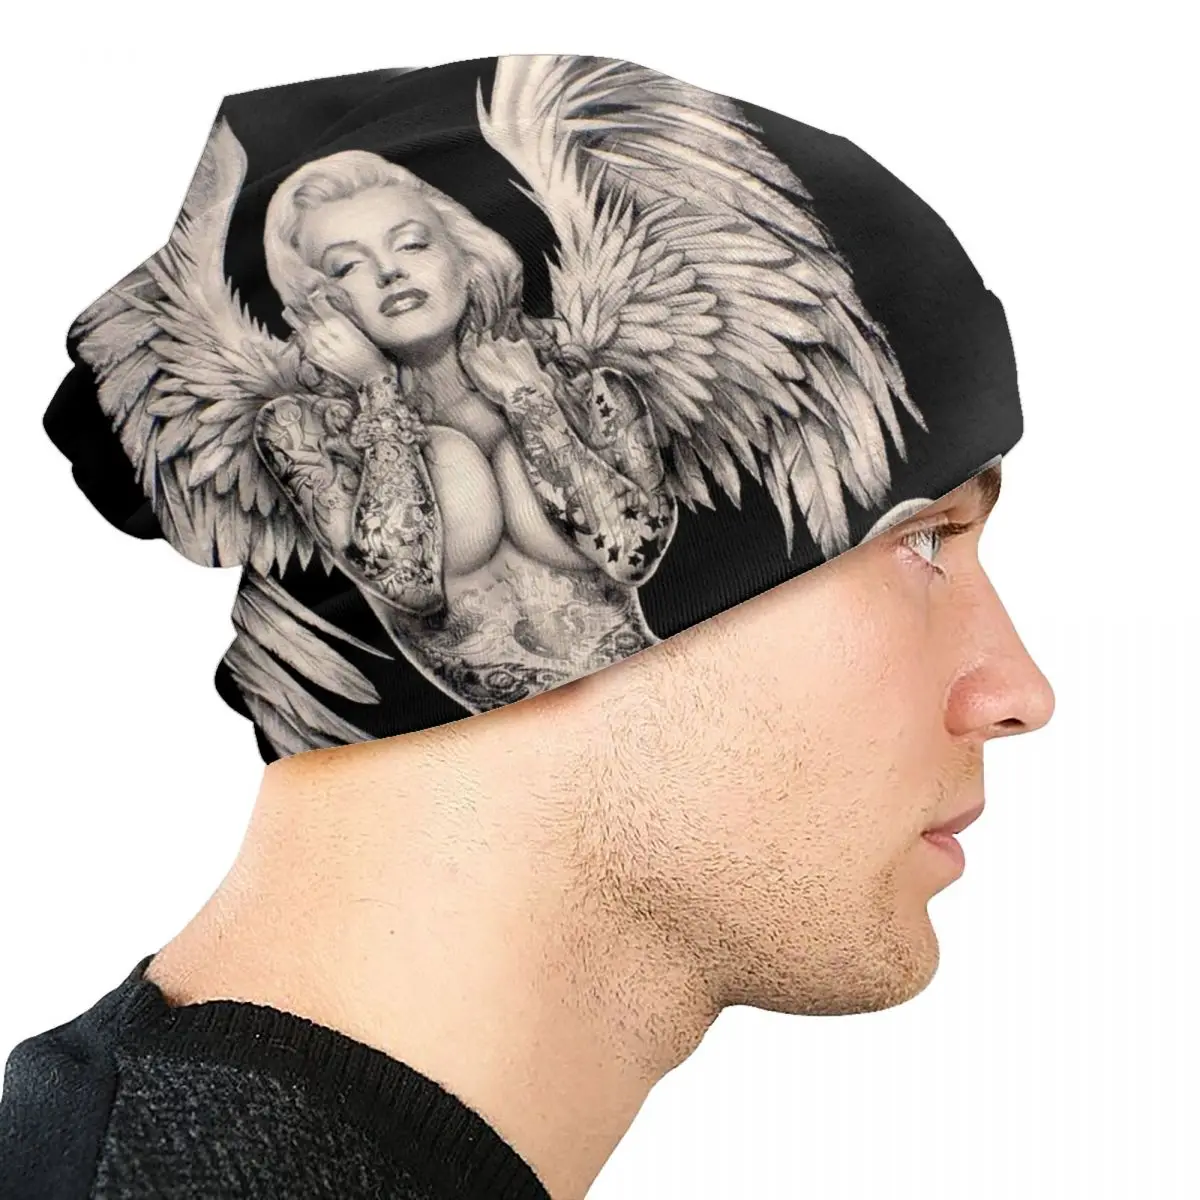  - Sexy Golden Girl Bonnet Hats Street Knitting Hat For Women Men Warm Winter Monroe Marilyns Skullies Beanies Caps